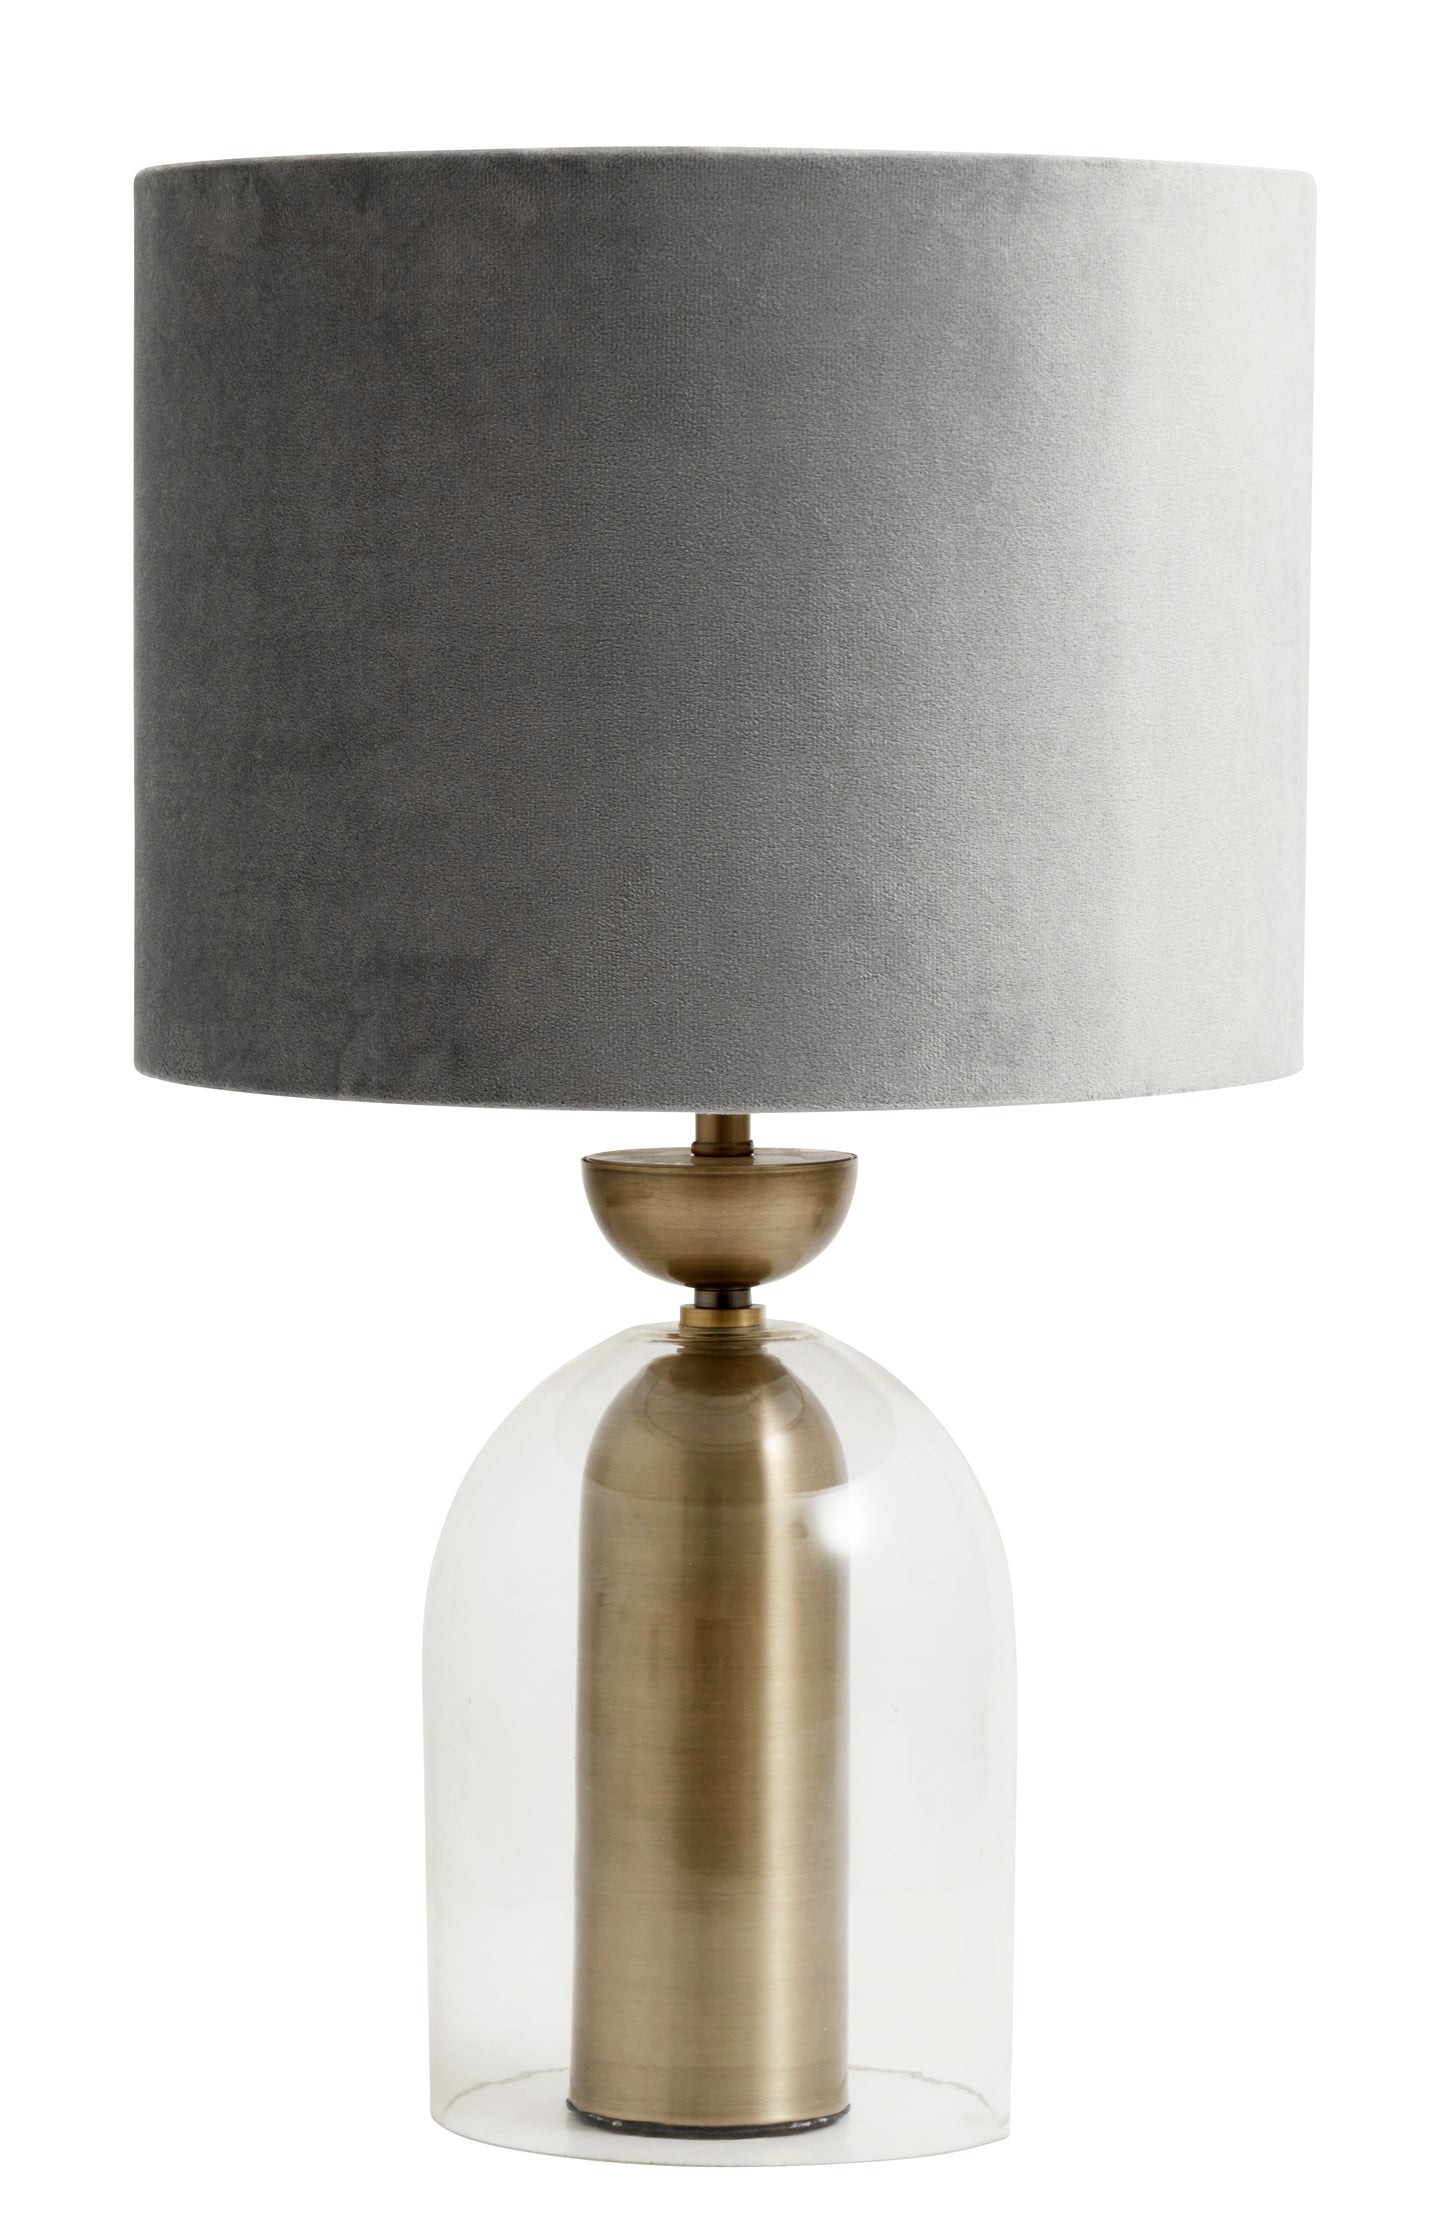 Bordslampa / lampa fot i klart glas och gyllene metall - H39 cm